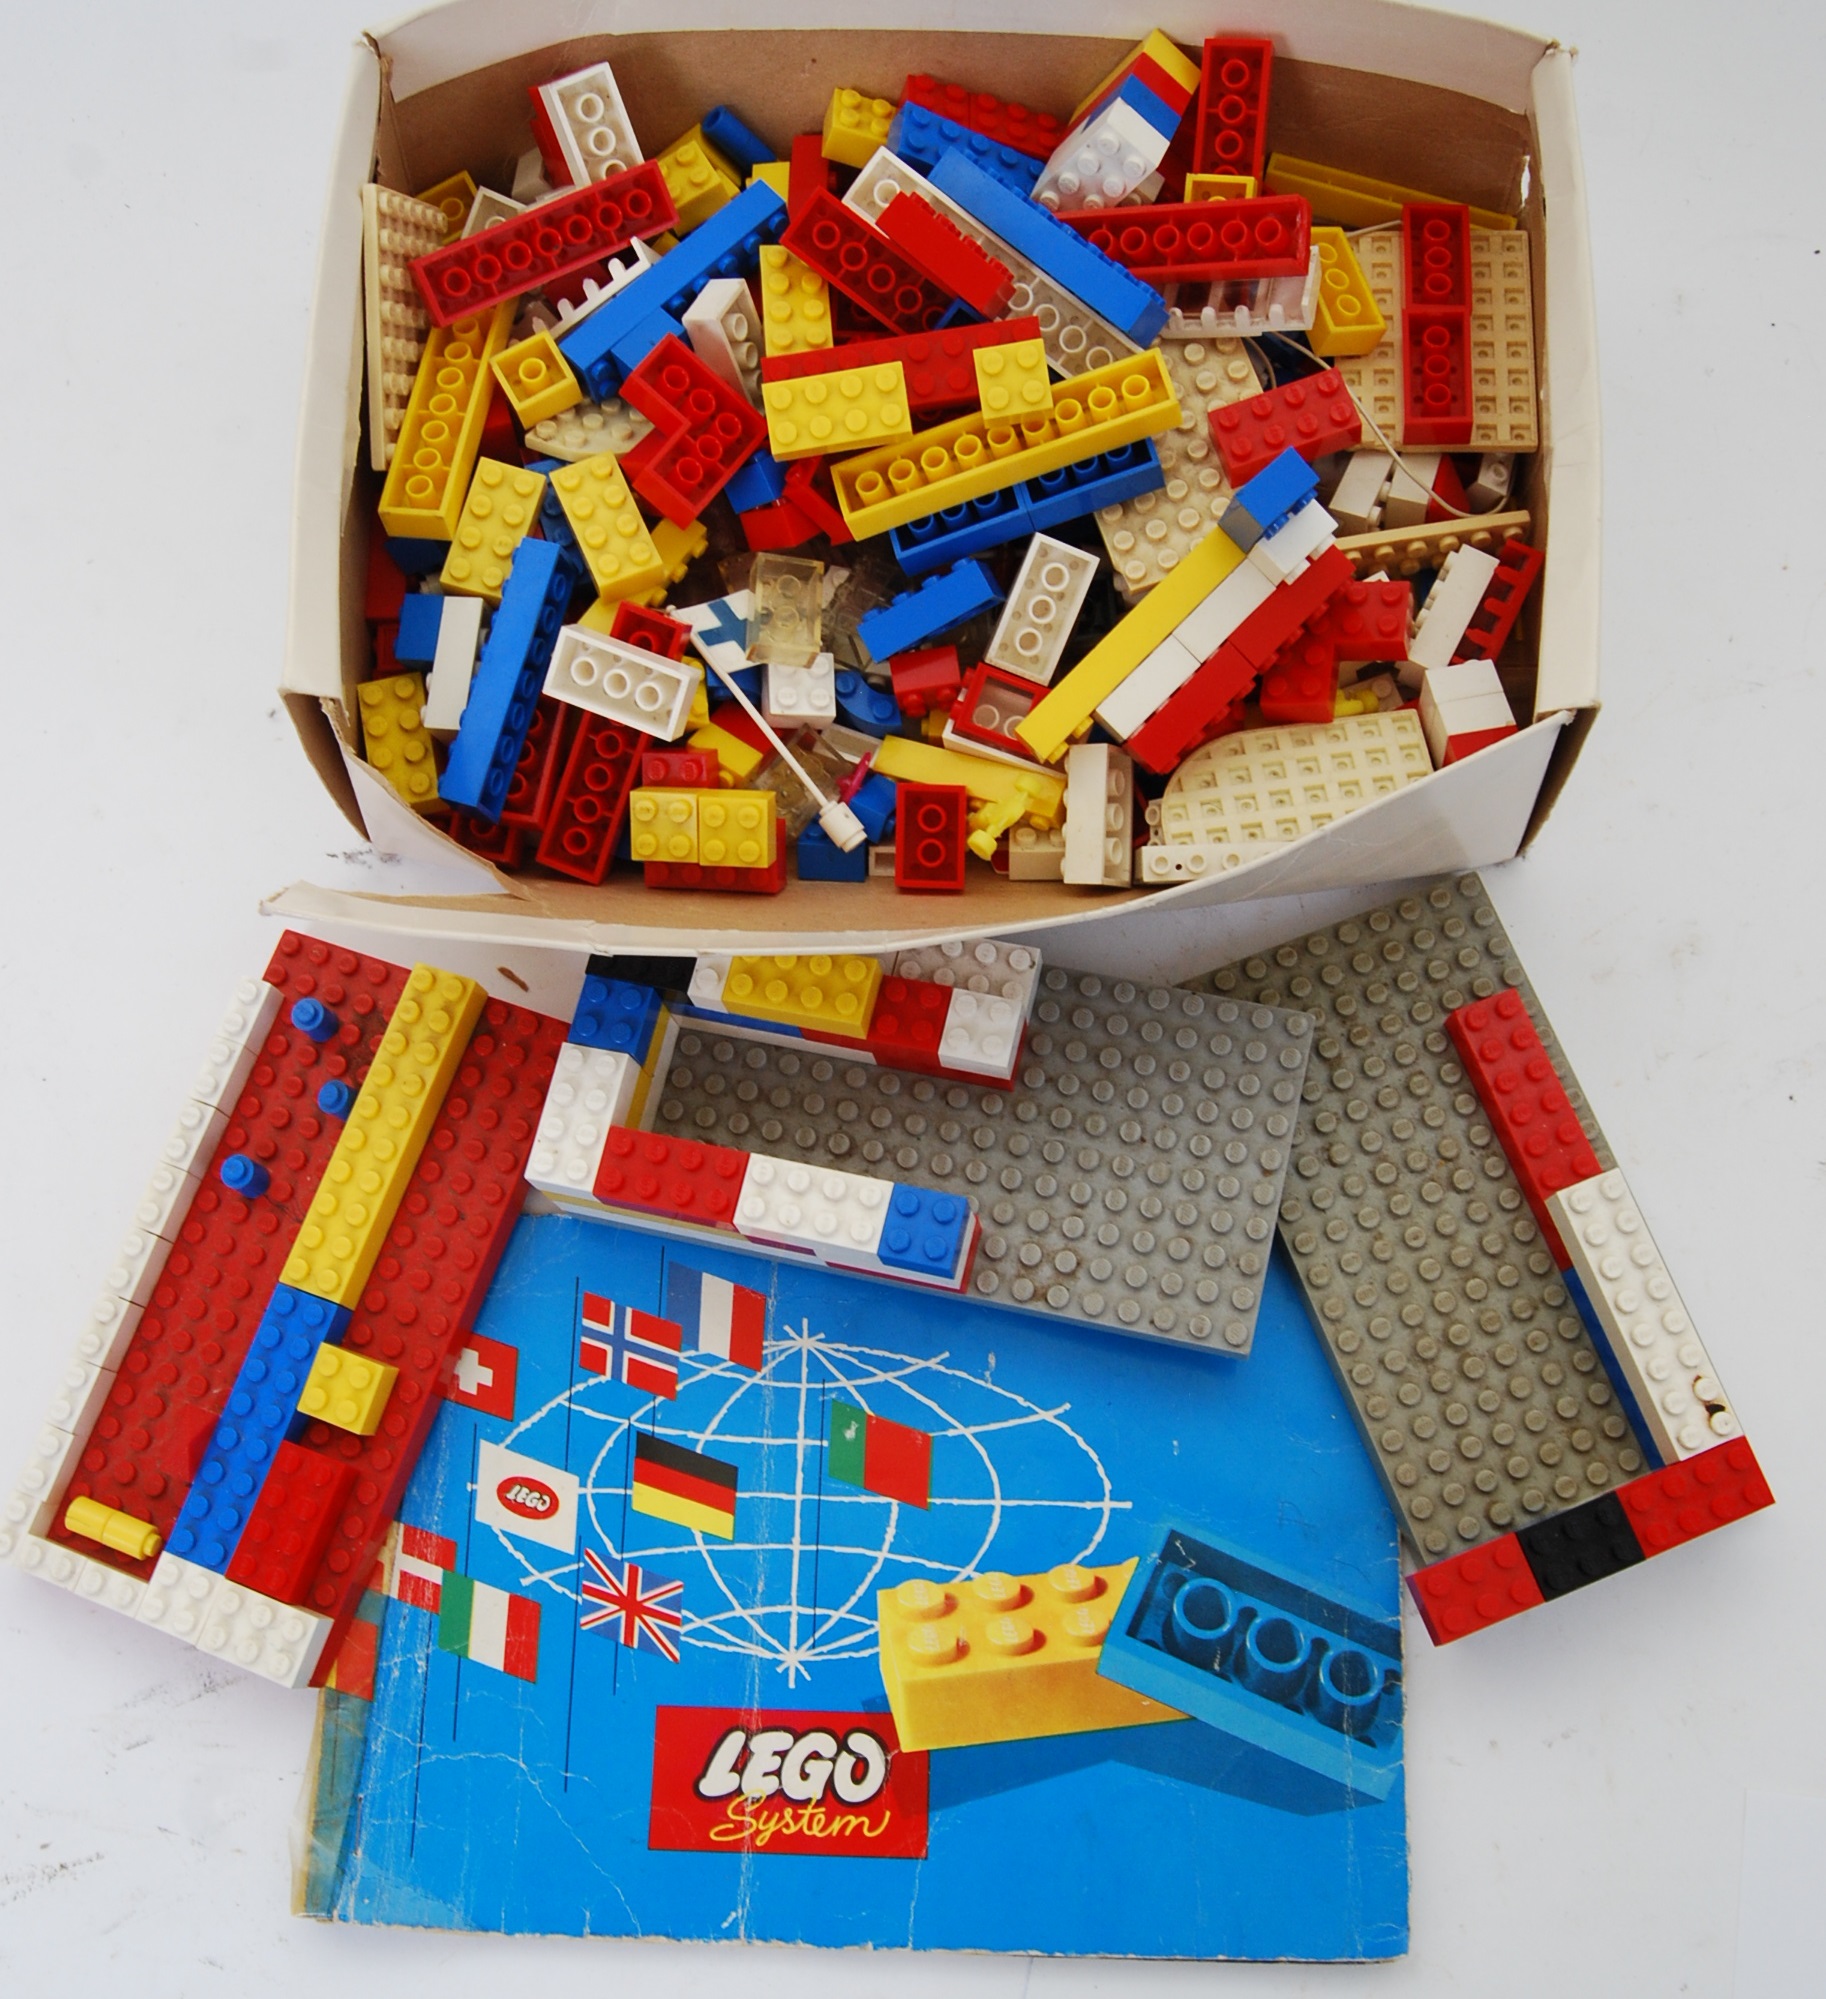 LEGO: A quantity of 1970's Lego - mostly